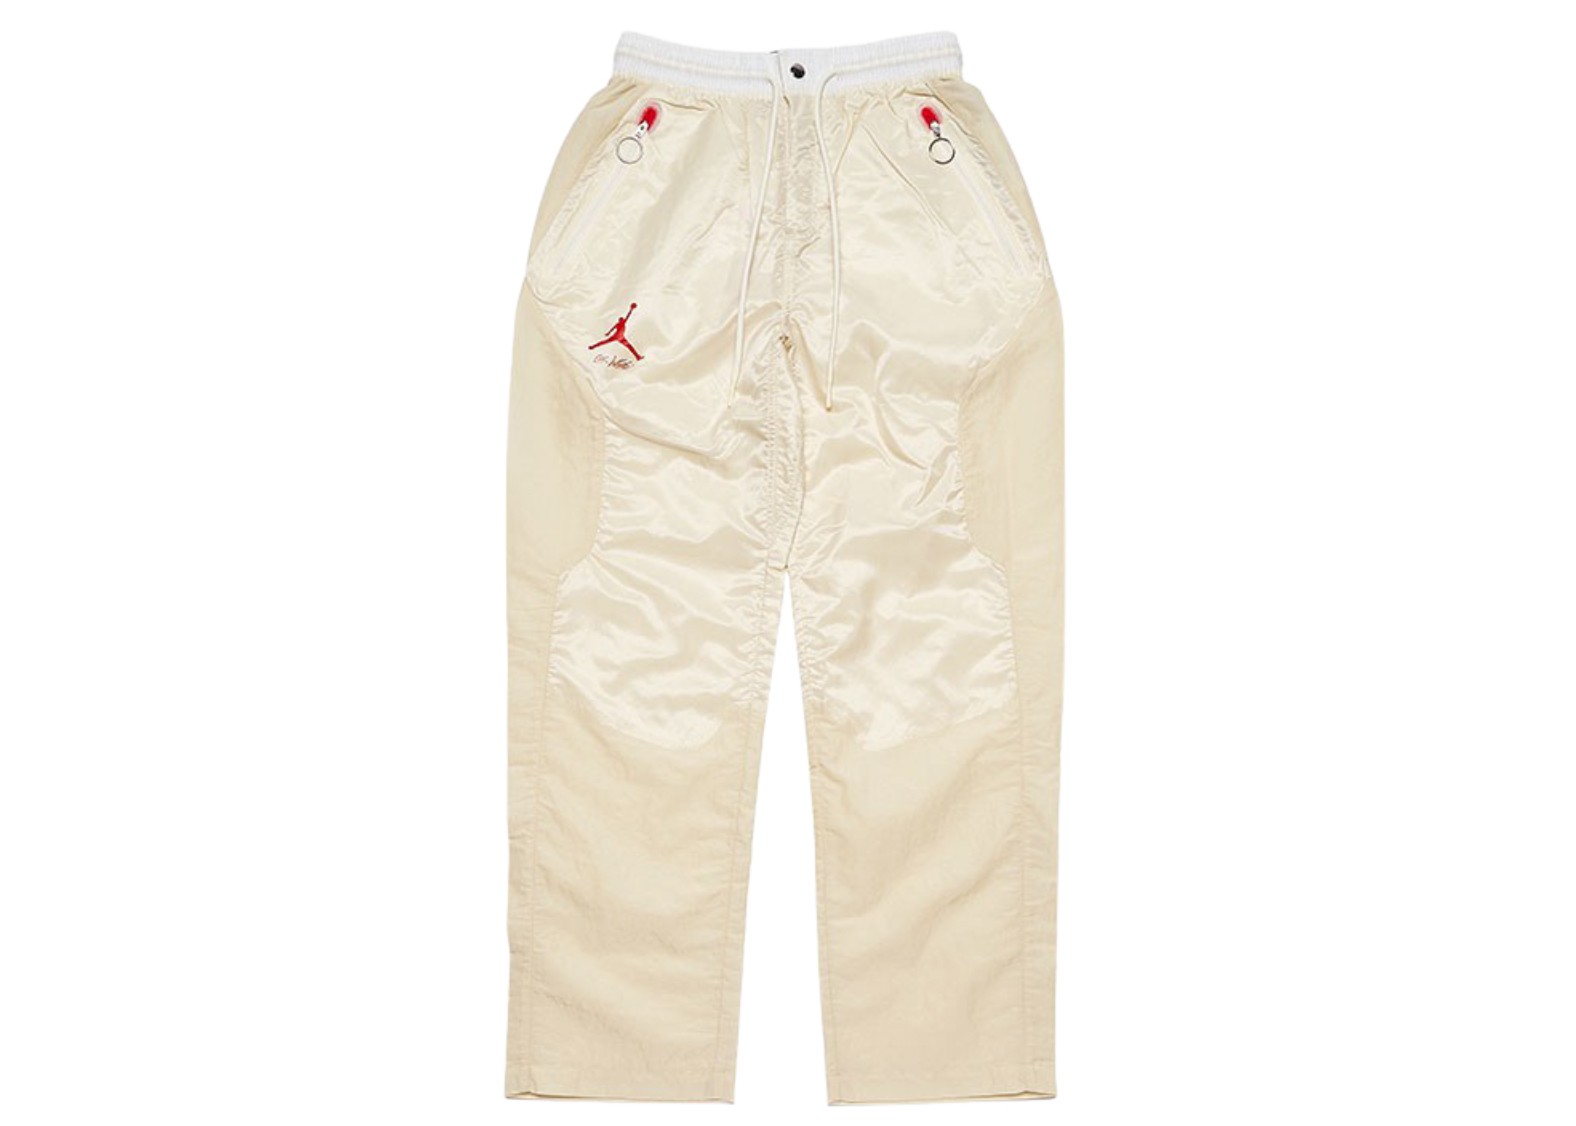 OFF-WHITE x Jordan Woven Pants (Asia Sizing) White